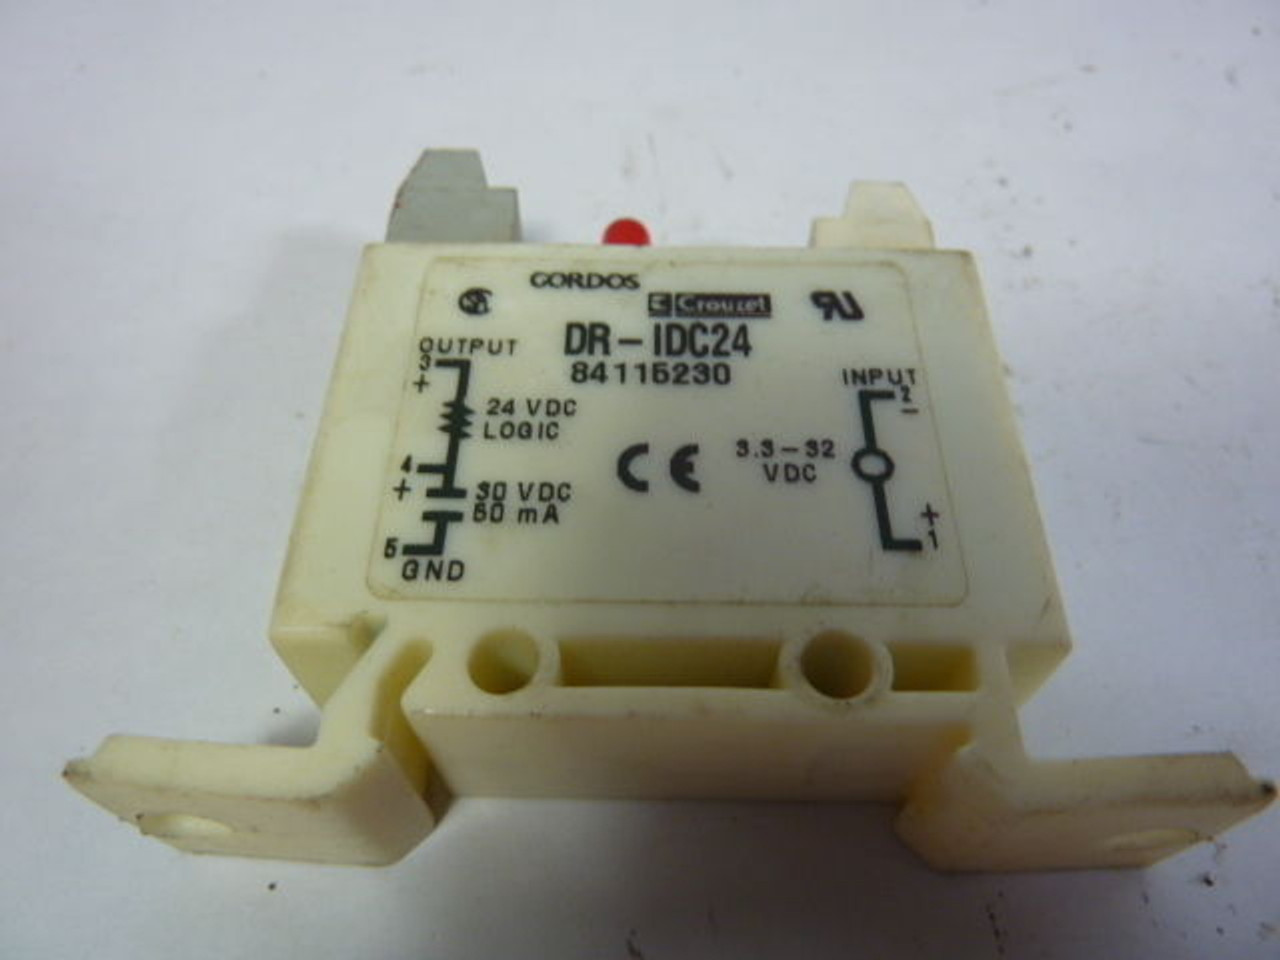 Gordos / Crouzet DR-IDC24 Input Module Relay USED